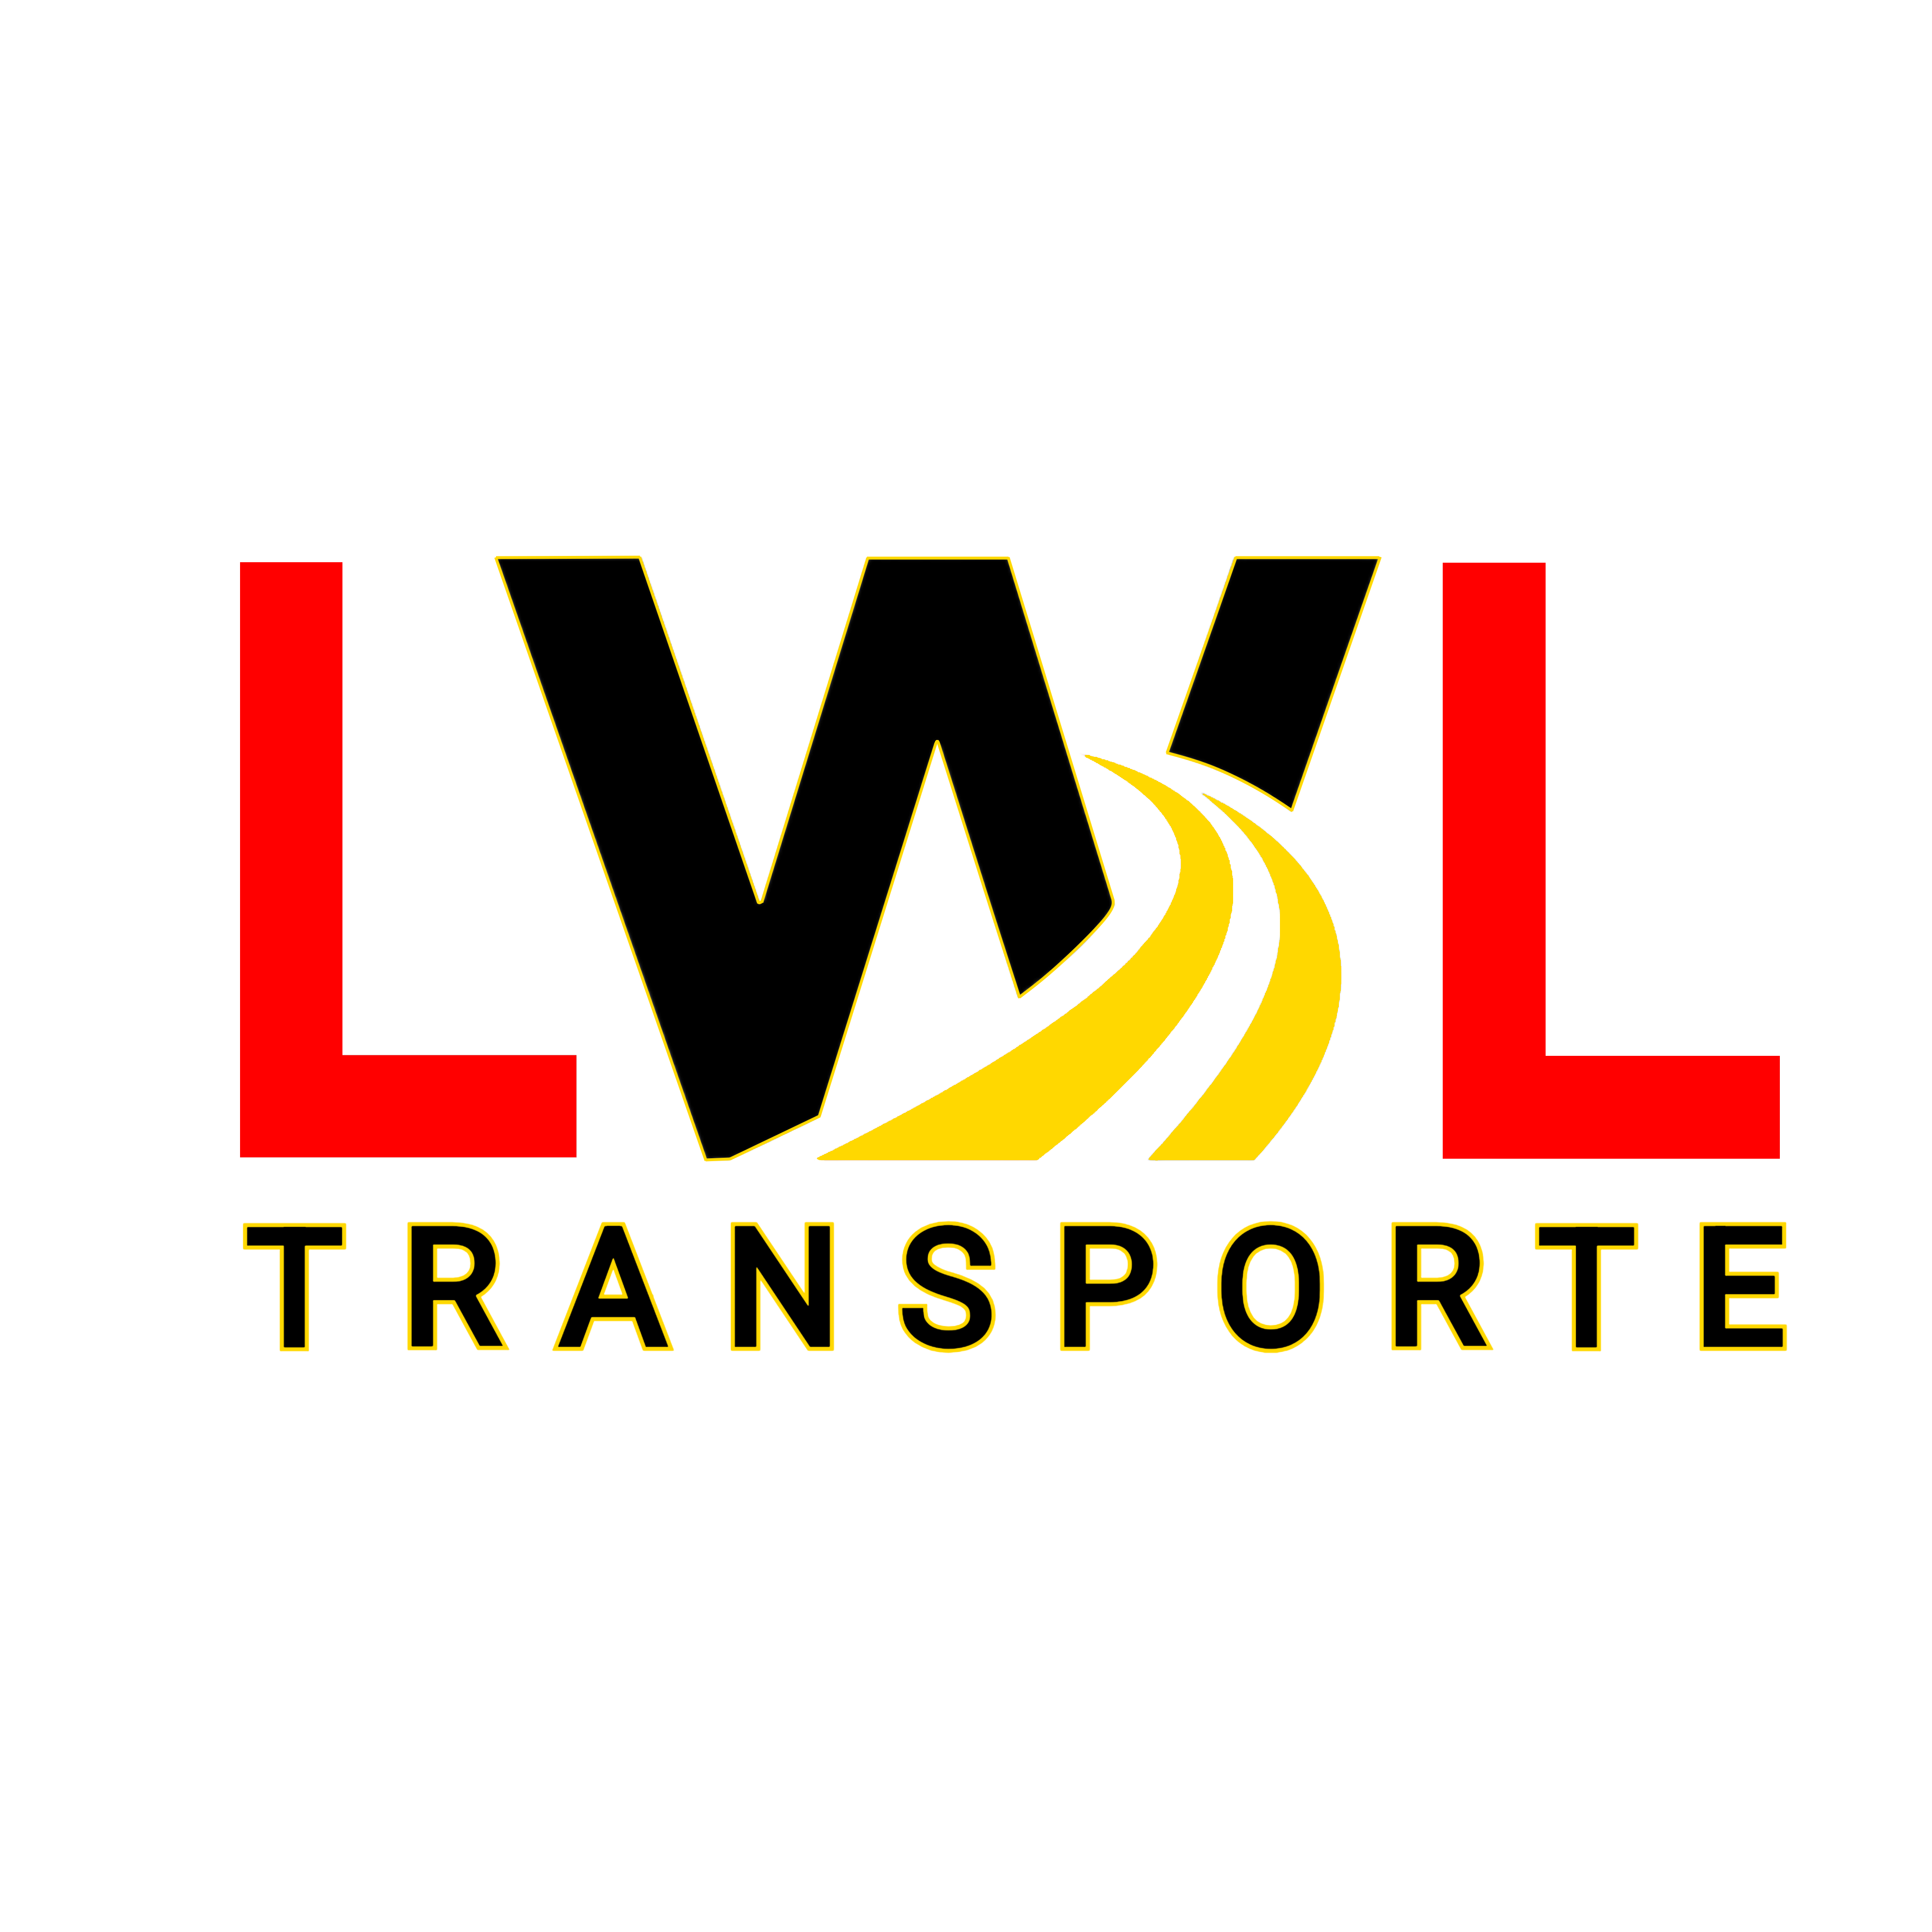 LWL Transporte